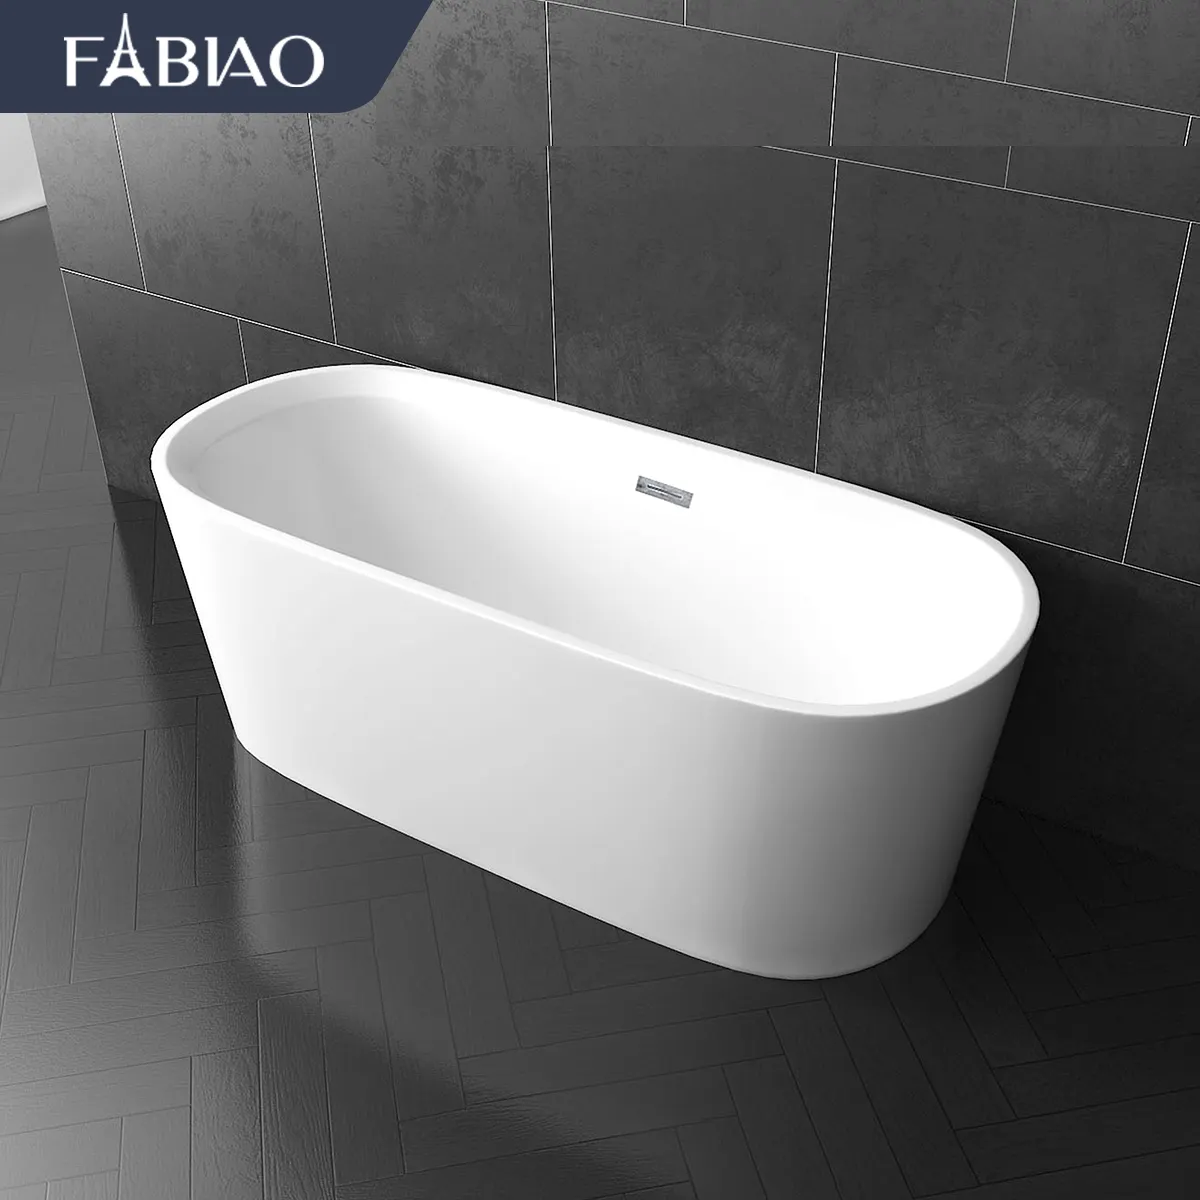 FABIAO marque wanna baignoire autoportante baignoire d'angle petite baignoire ovale surface solide baignoire simple